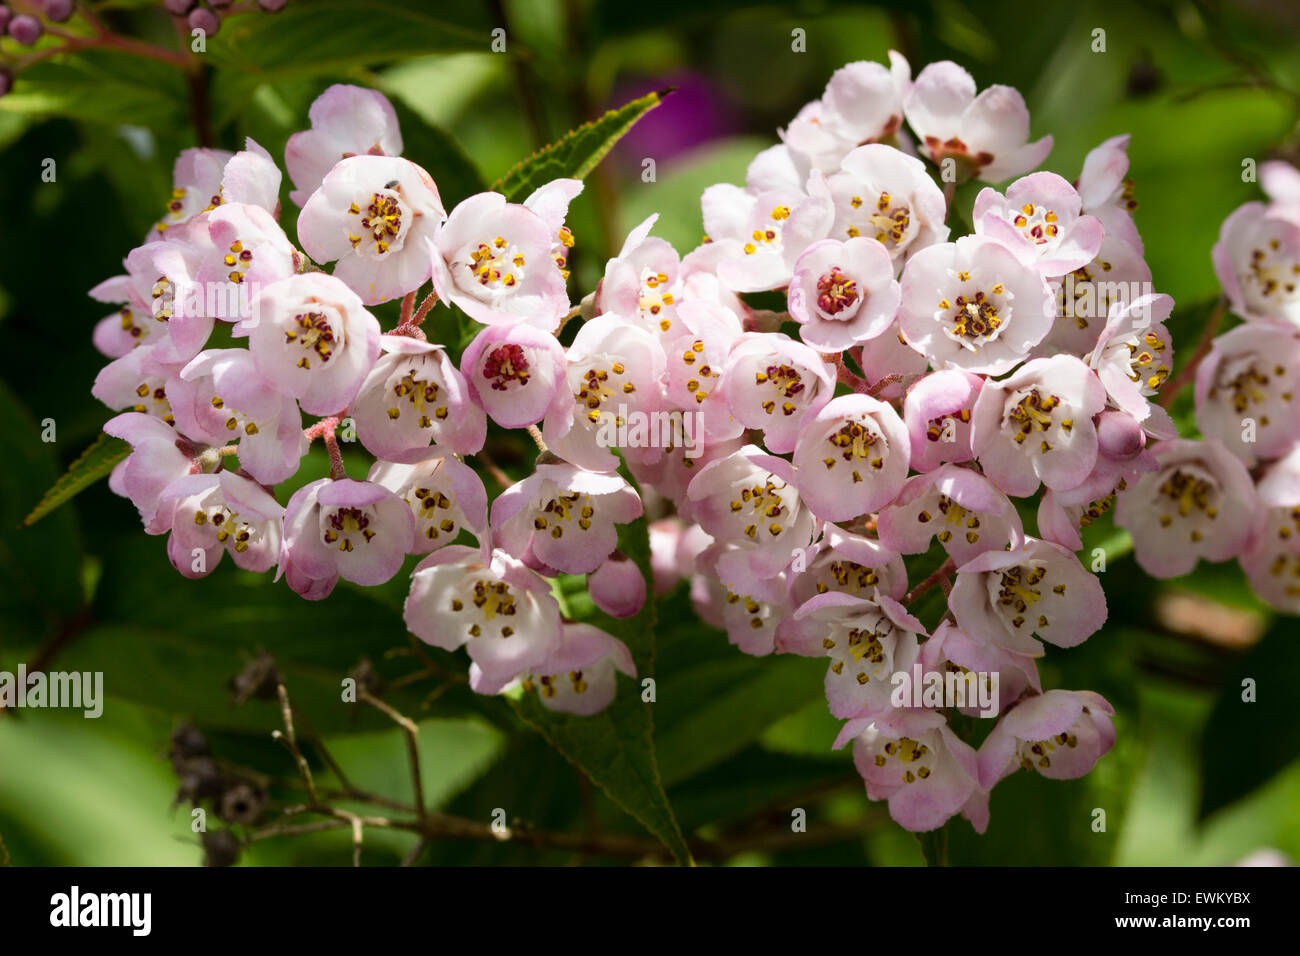 June flowers of the hardy shrub, Deutzia compacta 'Lavender Time' Stock Photo